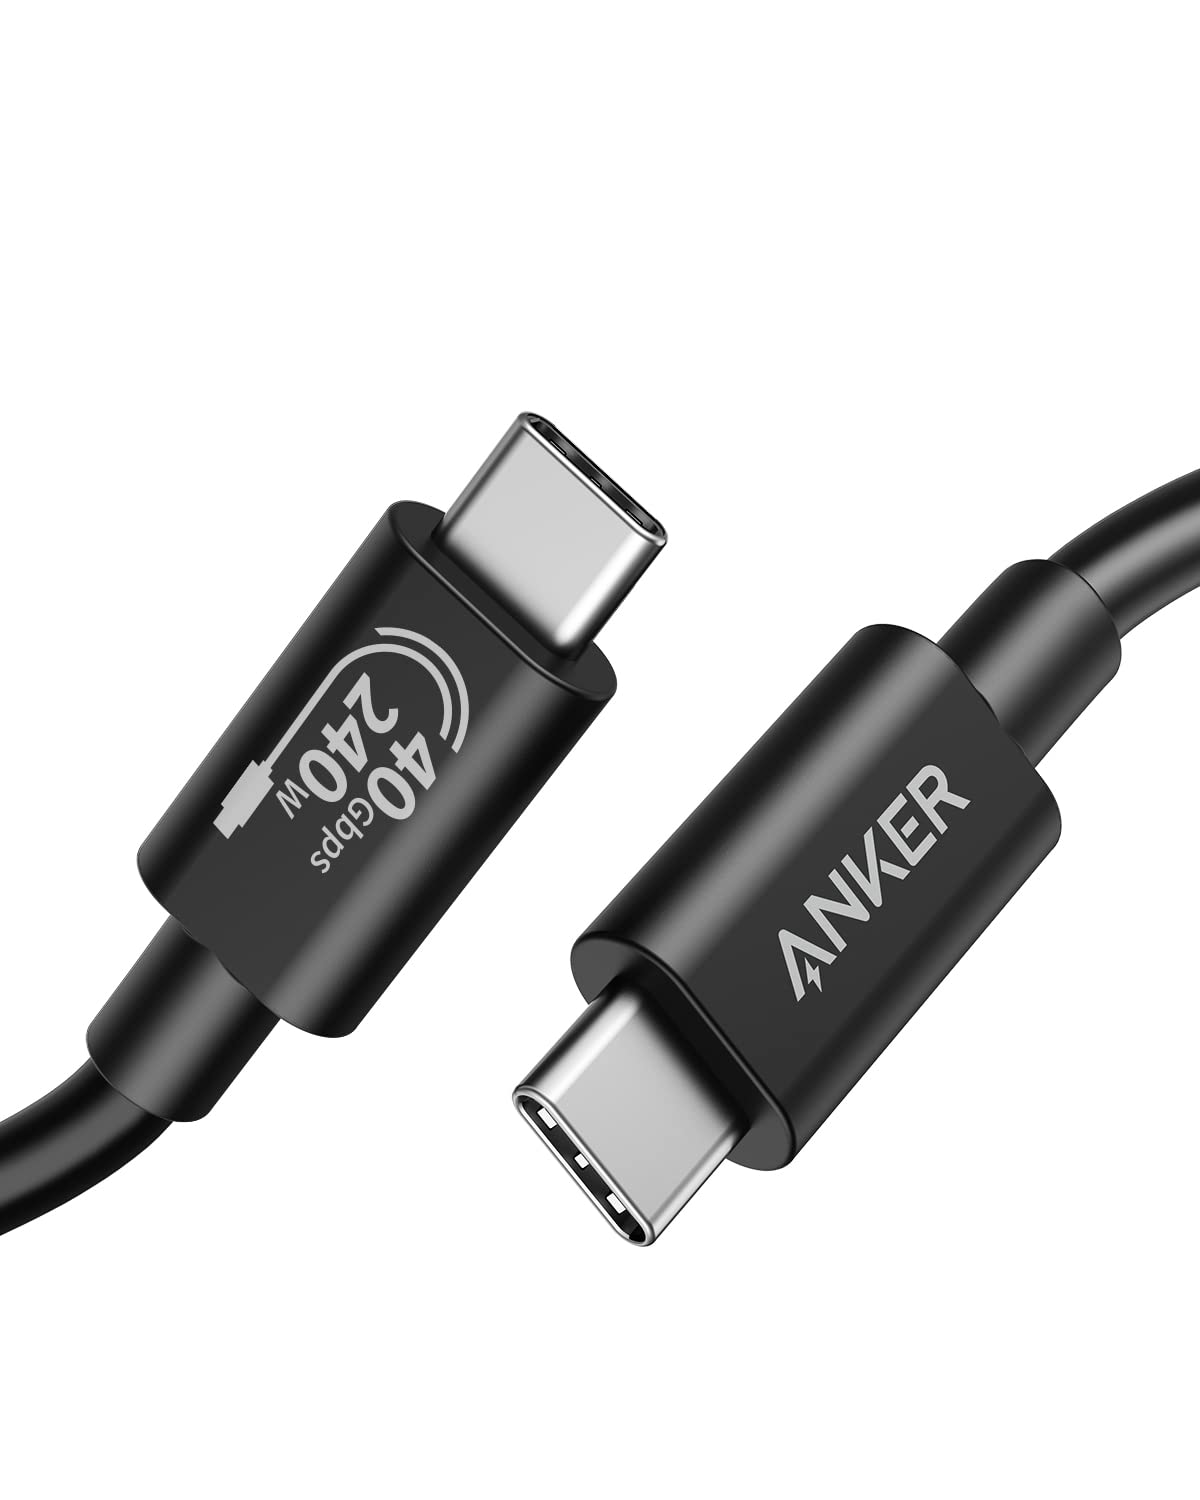 Anker 515 USB-C & USB-C ケーブル (USB4対応 1.0m) 8K 40Gbps高速データ転送 240W出力 対応 Galaxy iPad Pro MacBook Pro/Air 各種対応 ブラック